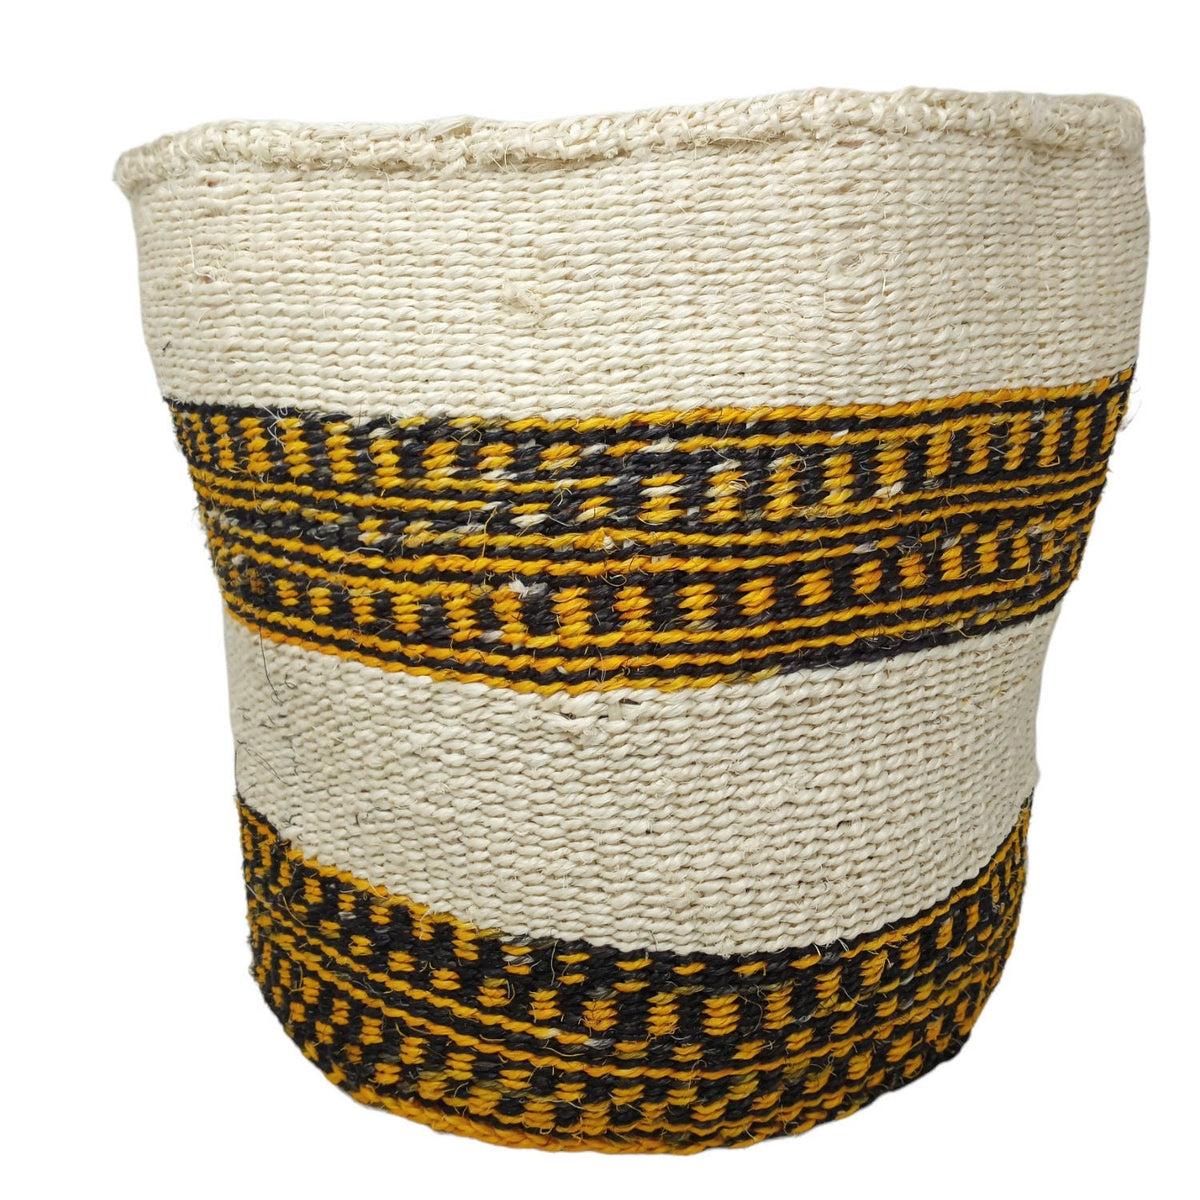 Woven African basket, 12 Inch baskets, Baskets for plants,  Handmade plant basket, Boho planters, Woven basket plant, woven storage basket